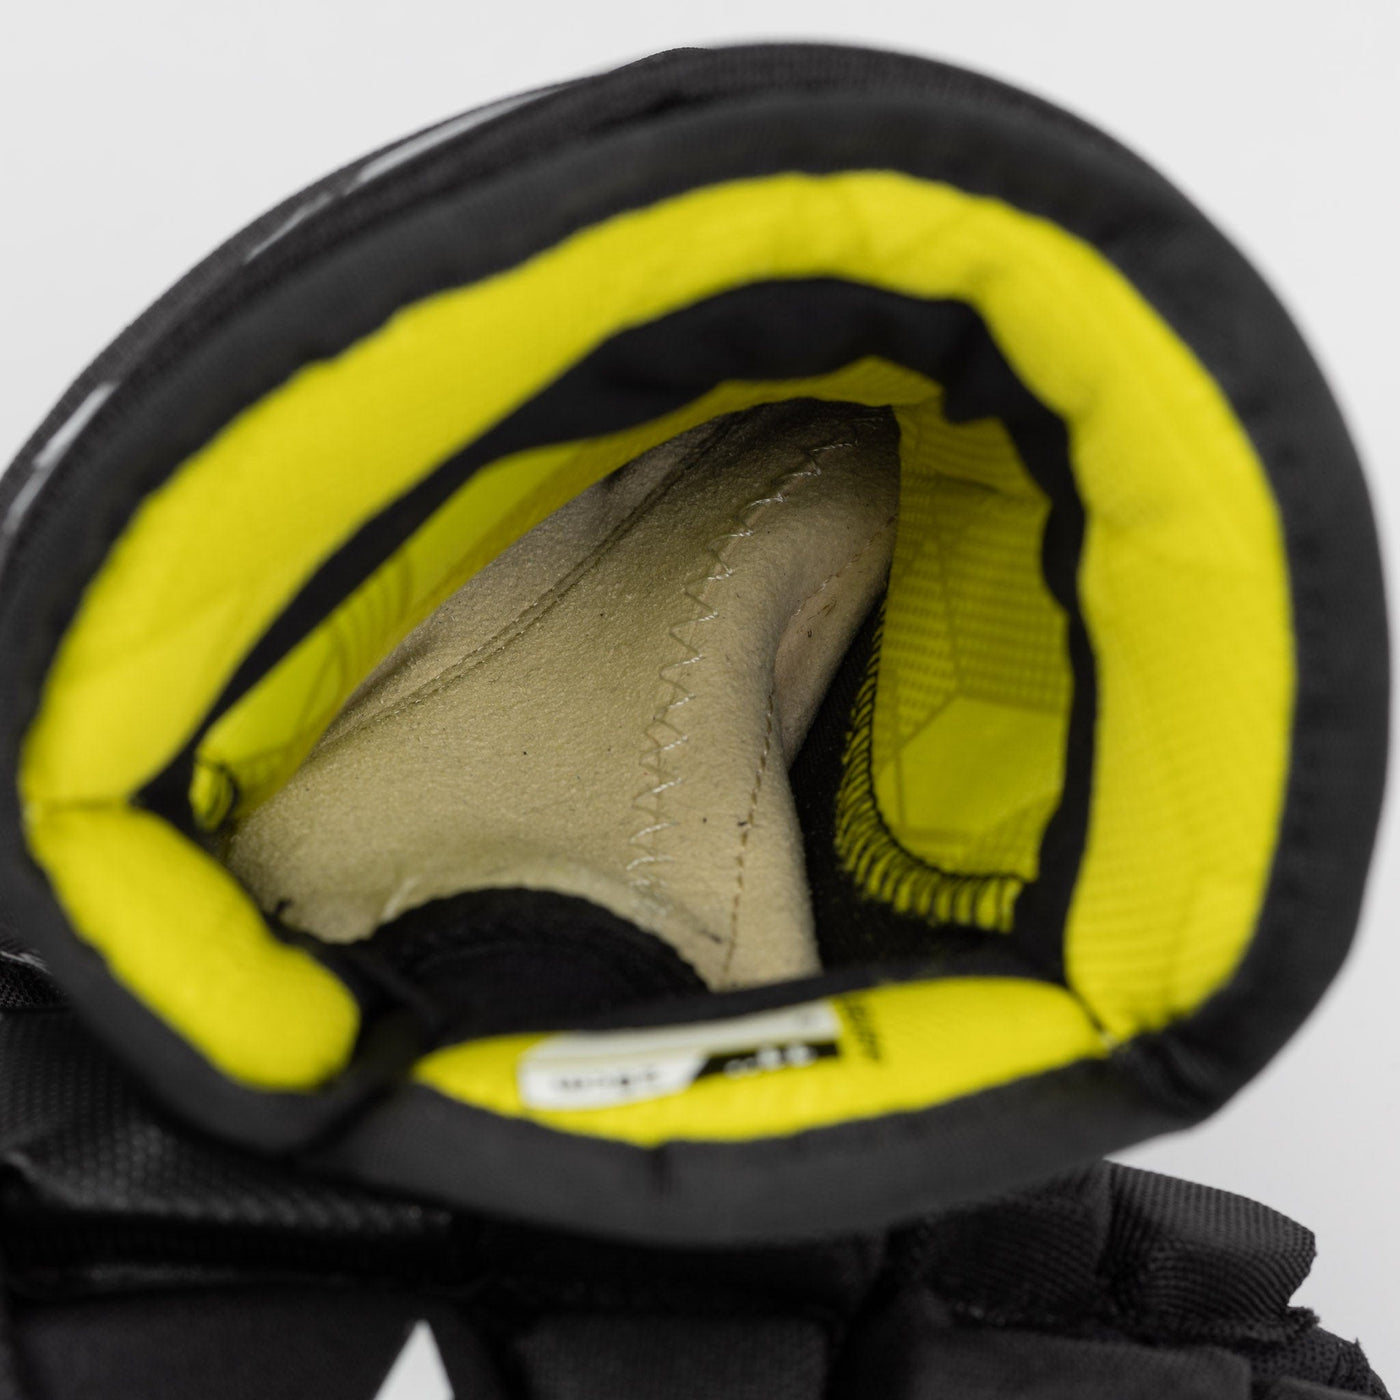 Bauer Supreme Matrix Junior Hockey Gloves - The Hockey Shop Source For Sports